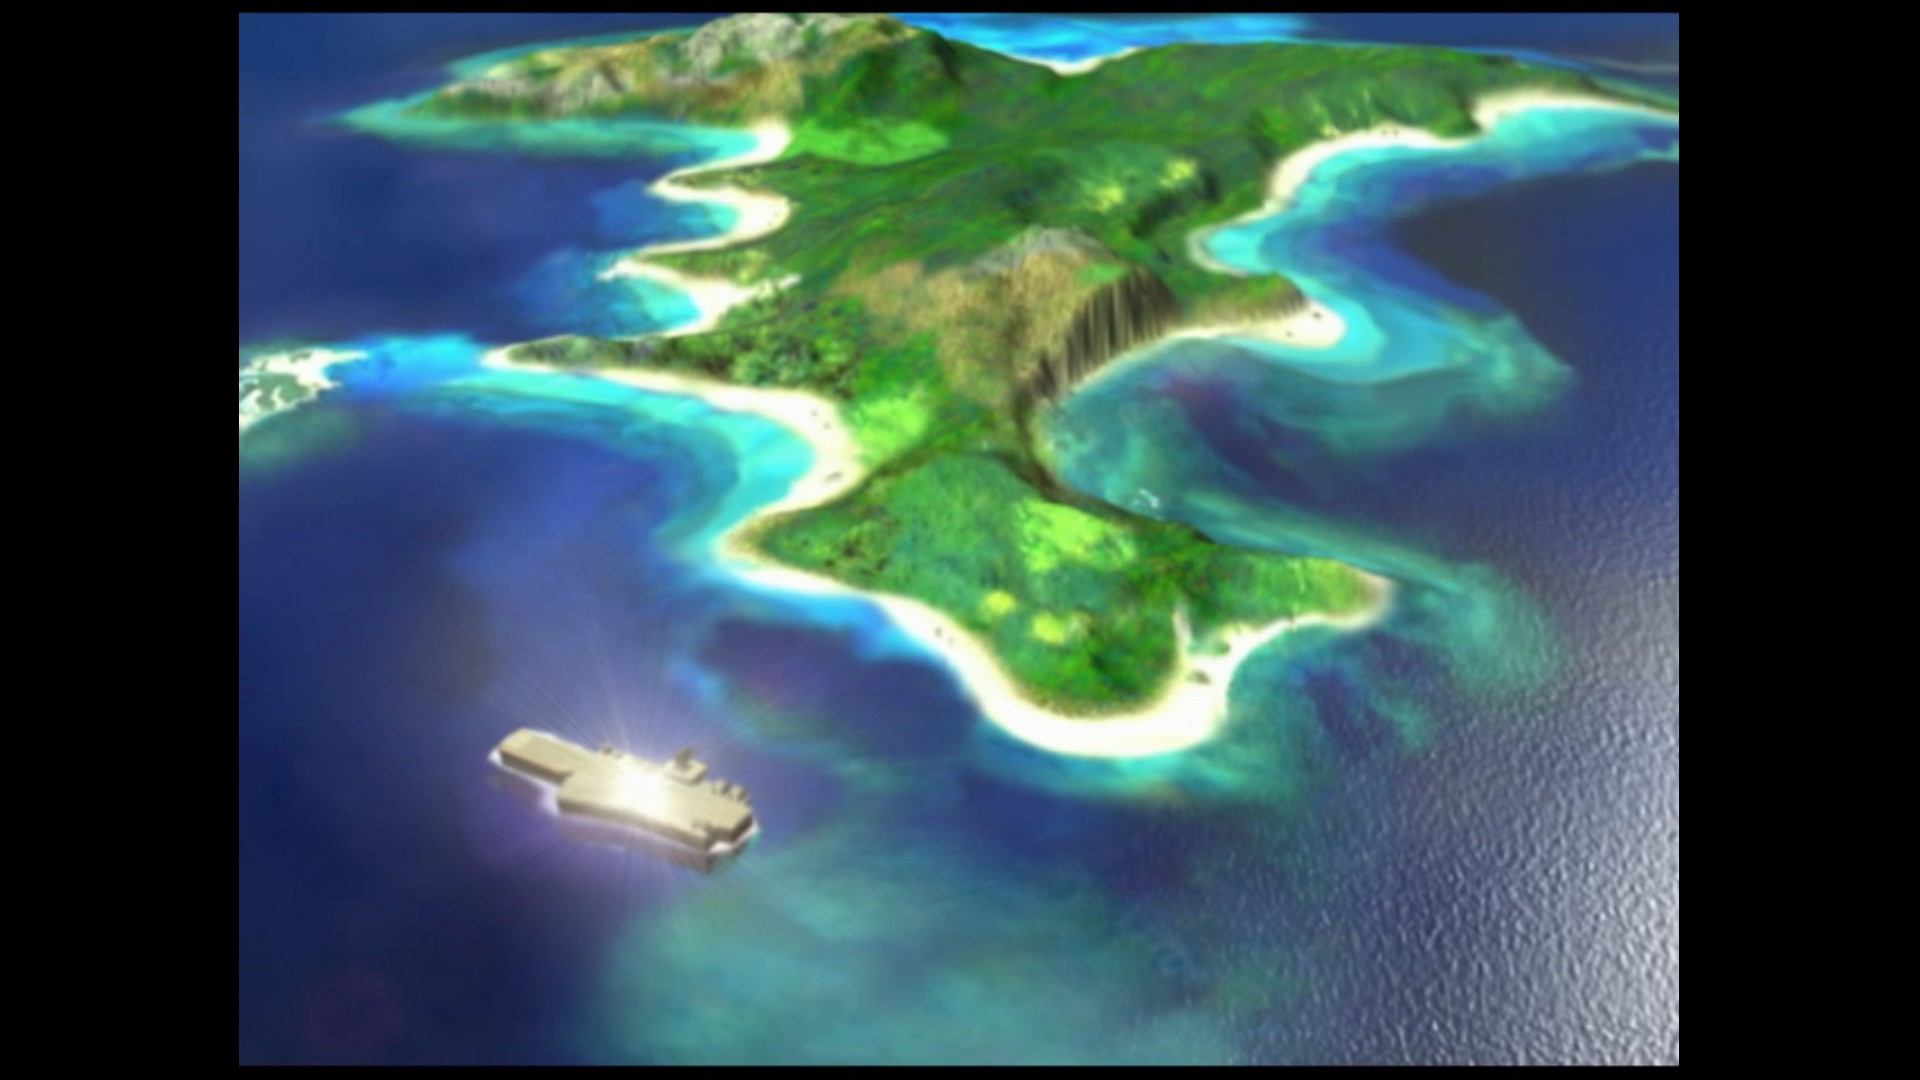 Go Sonic Run Faster Island Adventure download the last version for windows